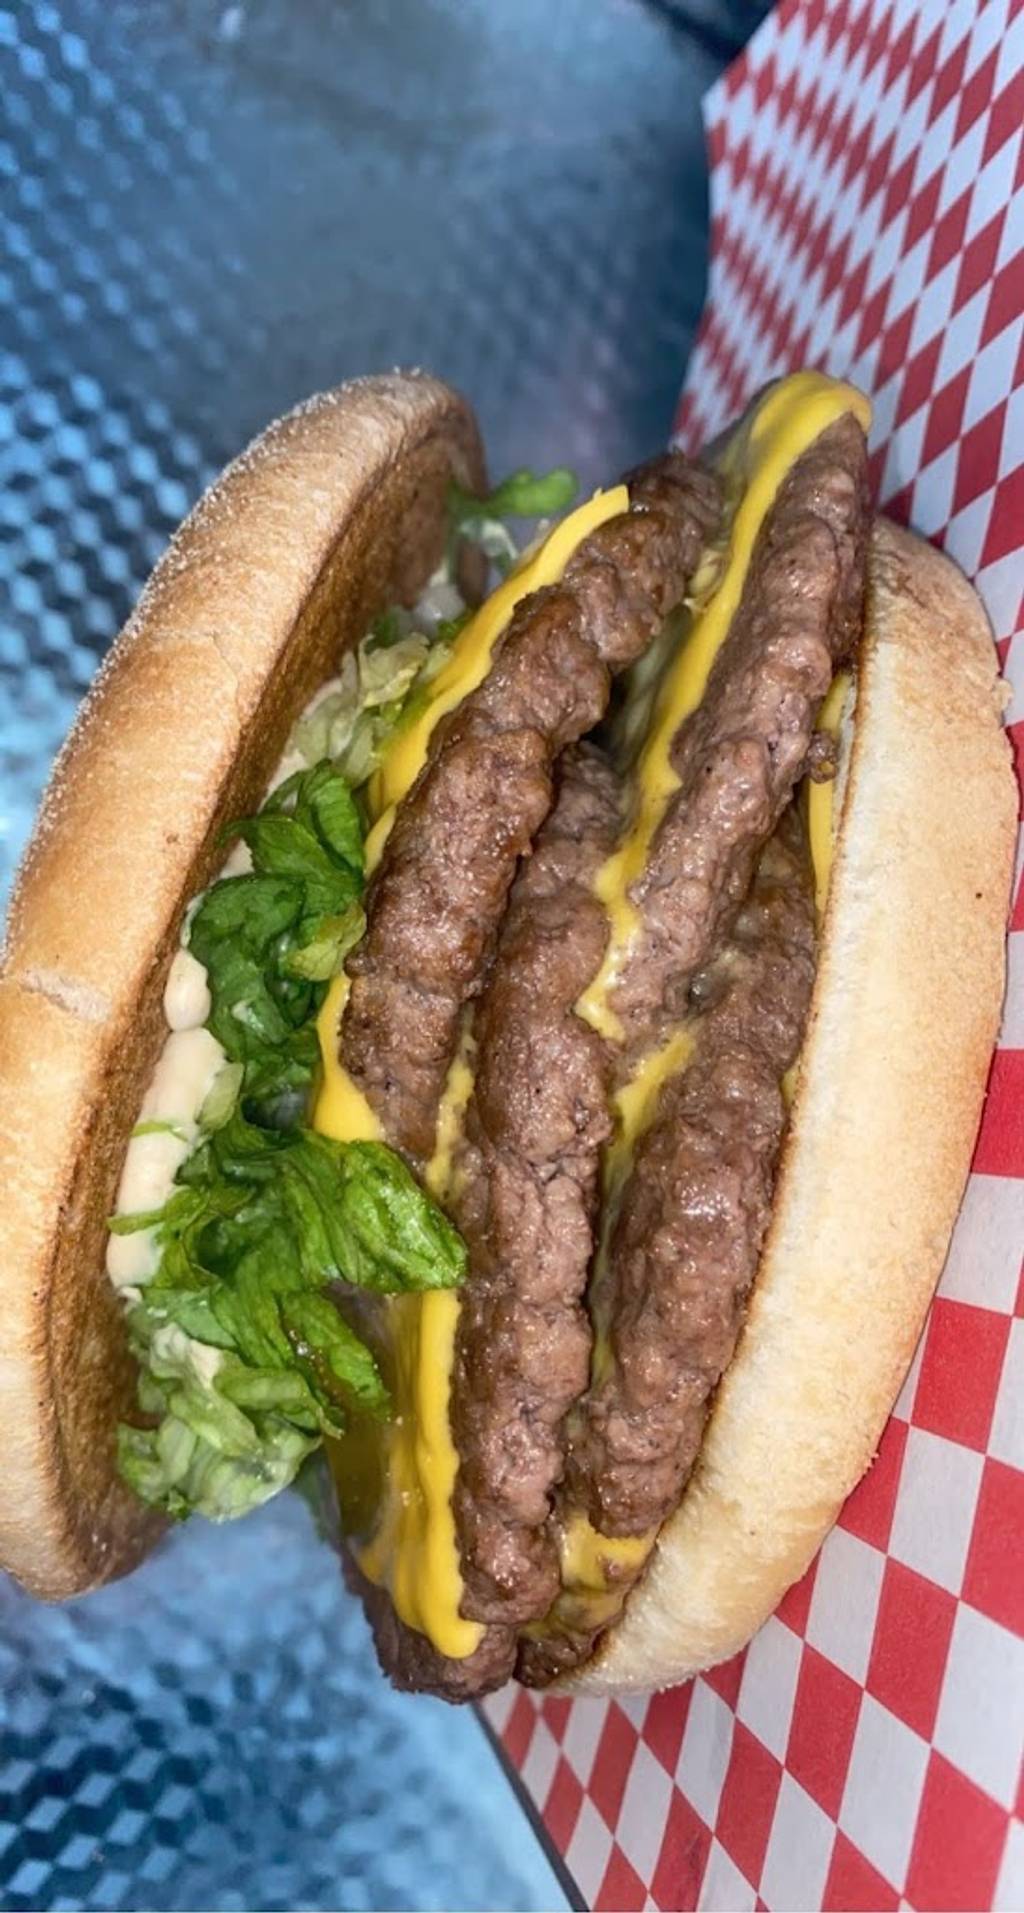 Str'eat Burger Roubaix Roubaix - Food Knackwurst Ingredient Fast food Hot dog bun